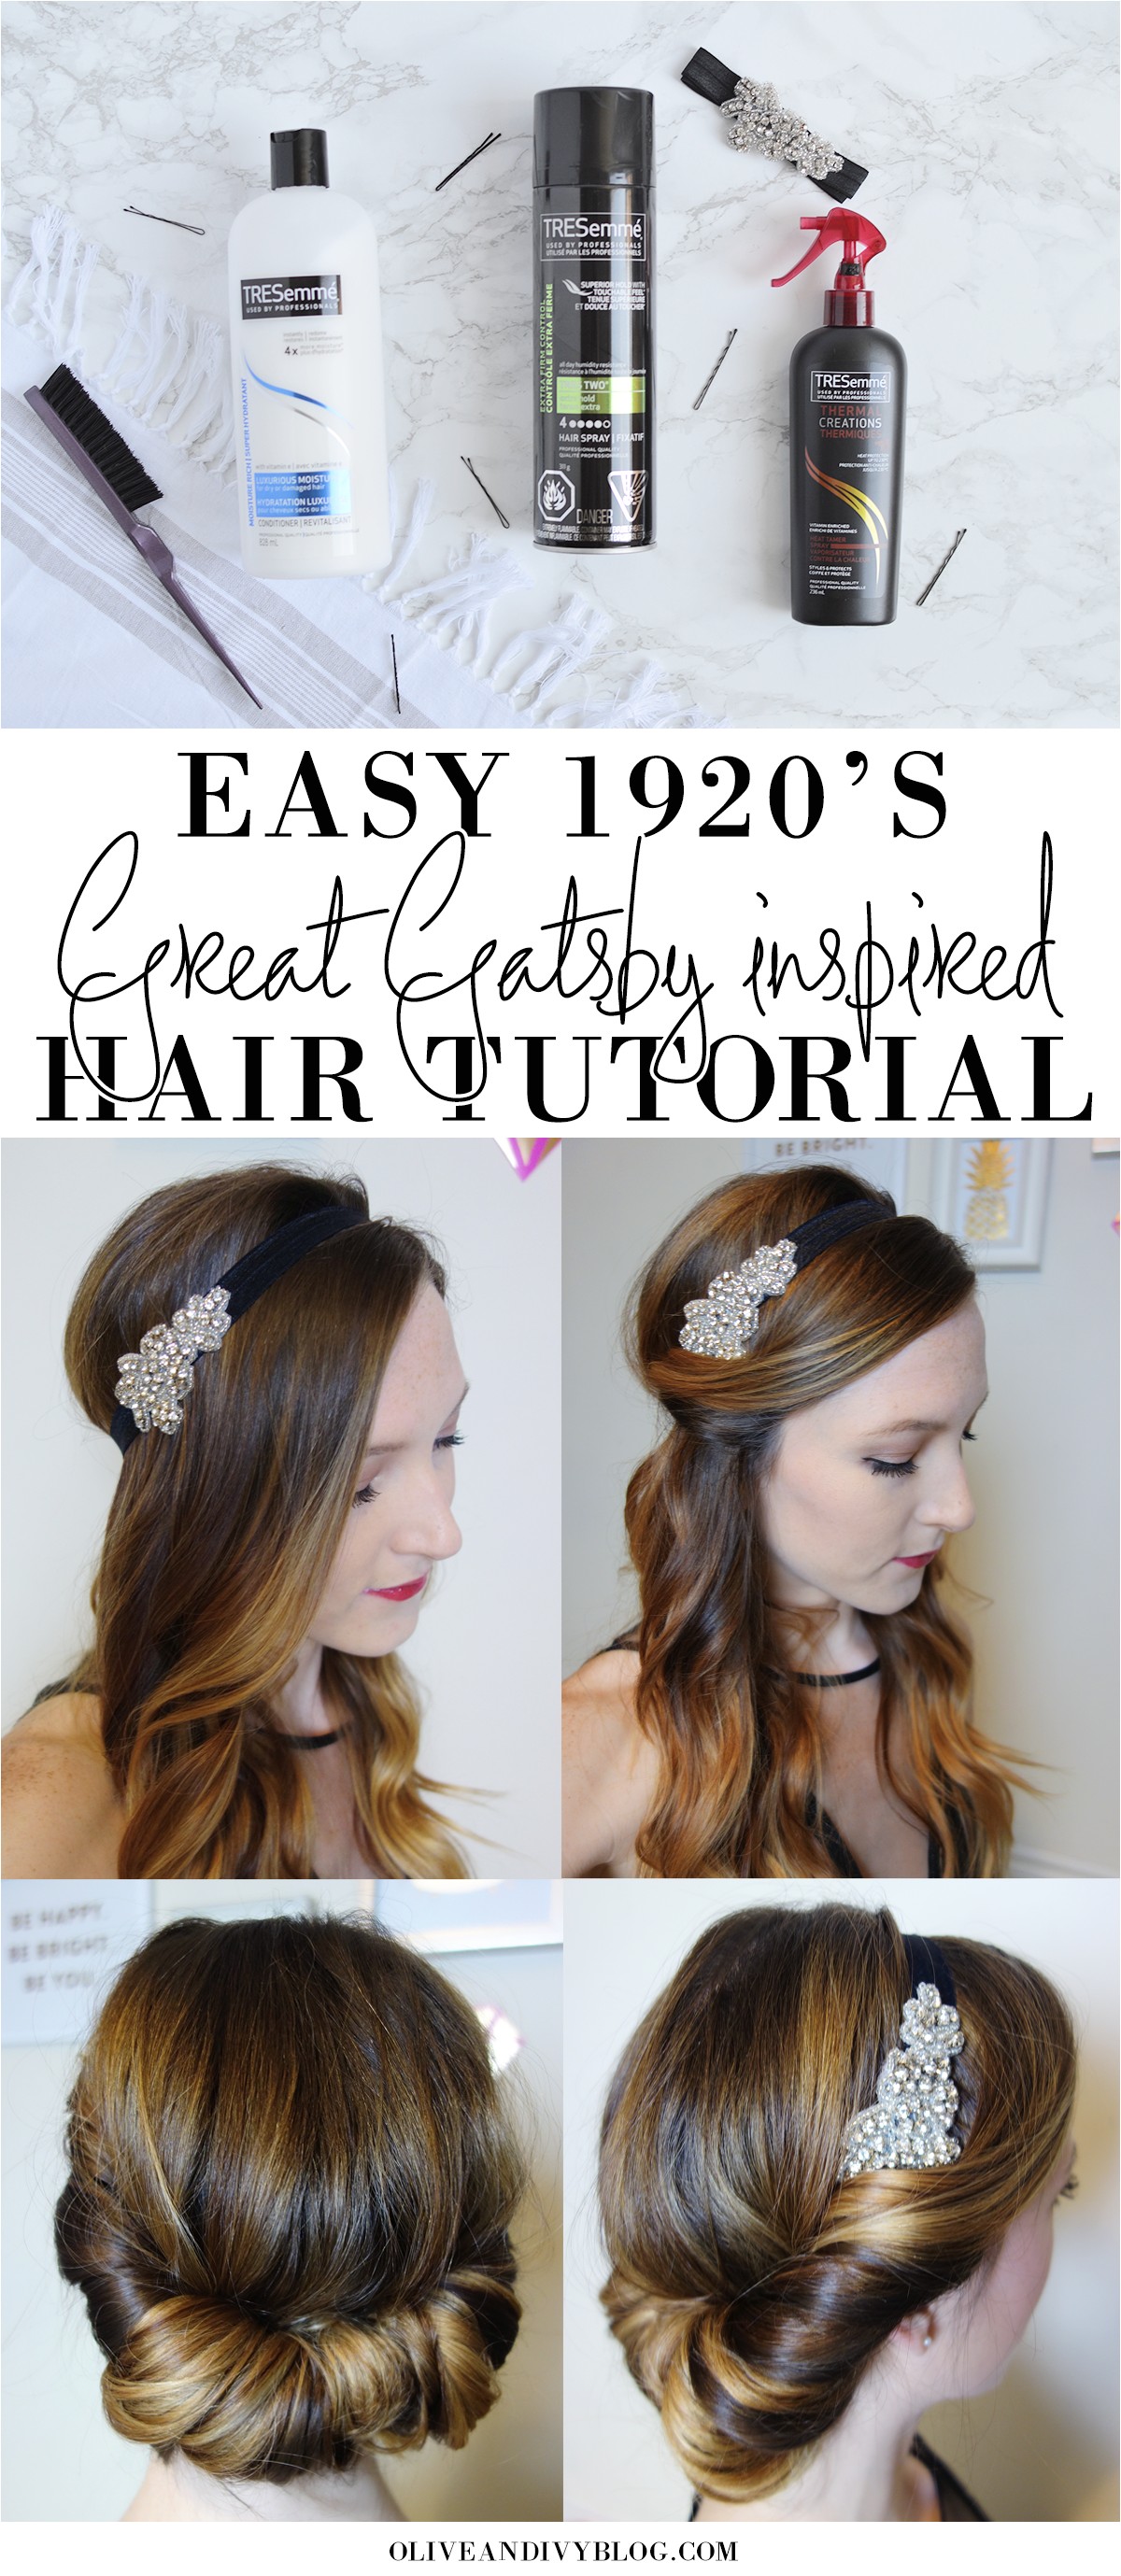 Easy 1920 s Great Gatsby hair tutorial AD